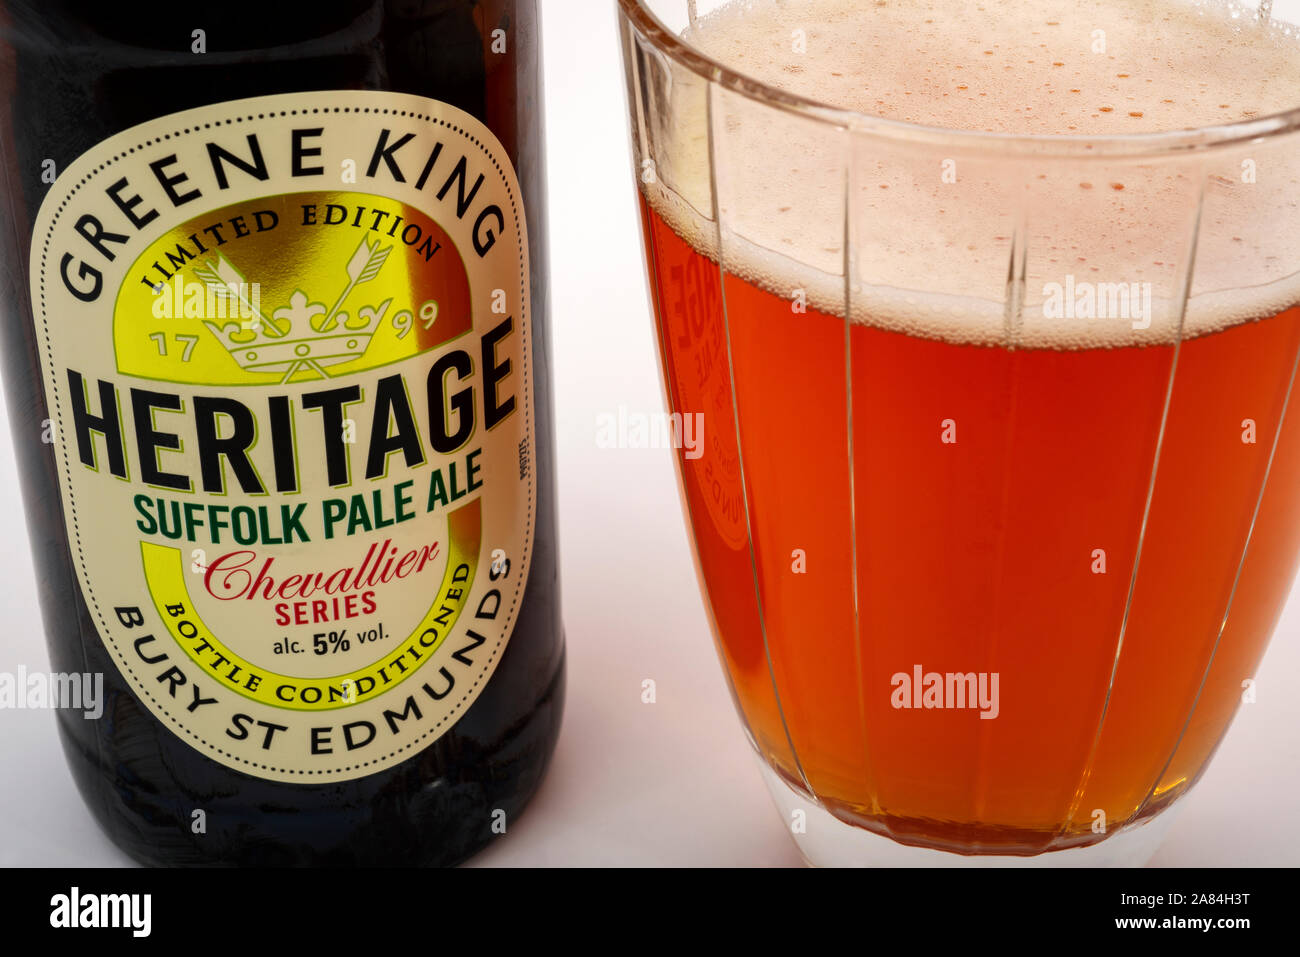 Greene King Heritage Suffolk Pale Ale Stock Photo